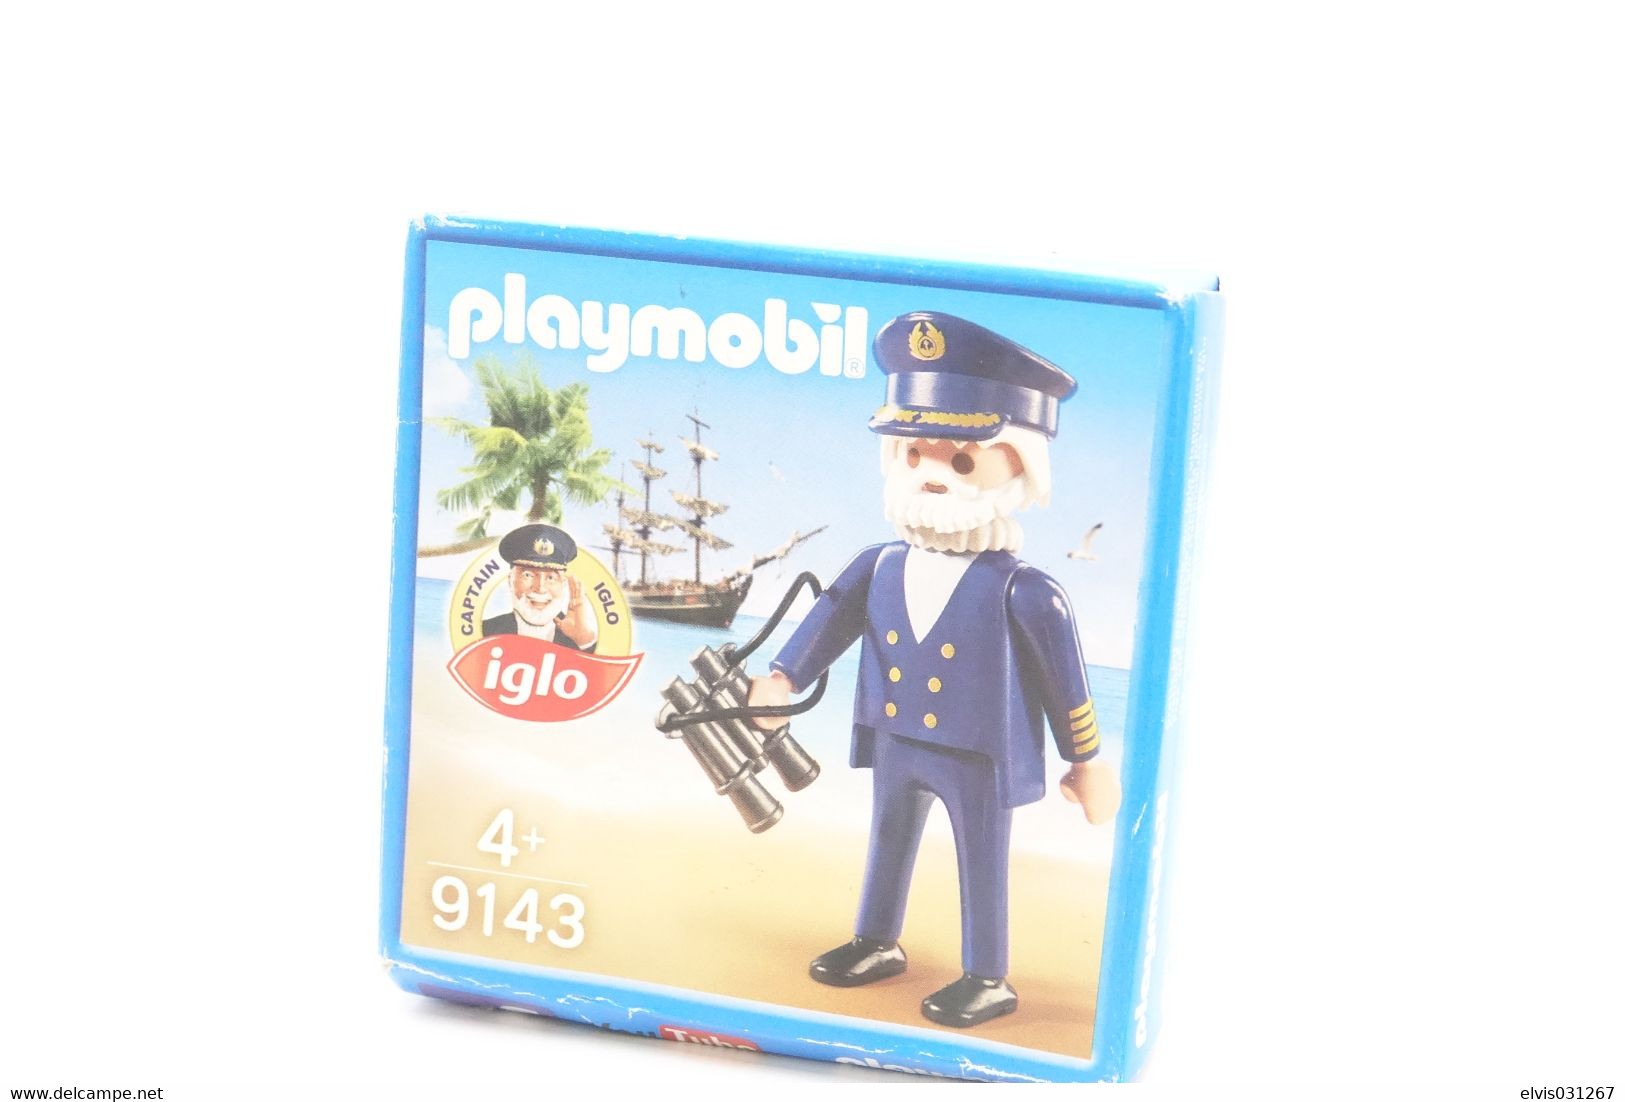 PLAYMOBIL - 9143 Captain Iglo With Original Box - Original Playmobil - Vintage - Catalogi